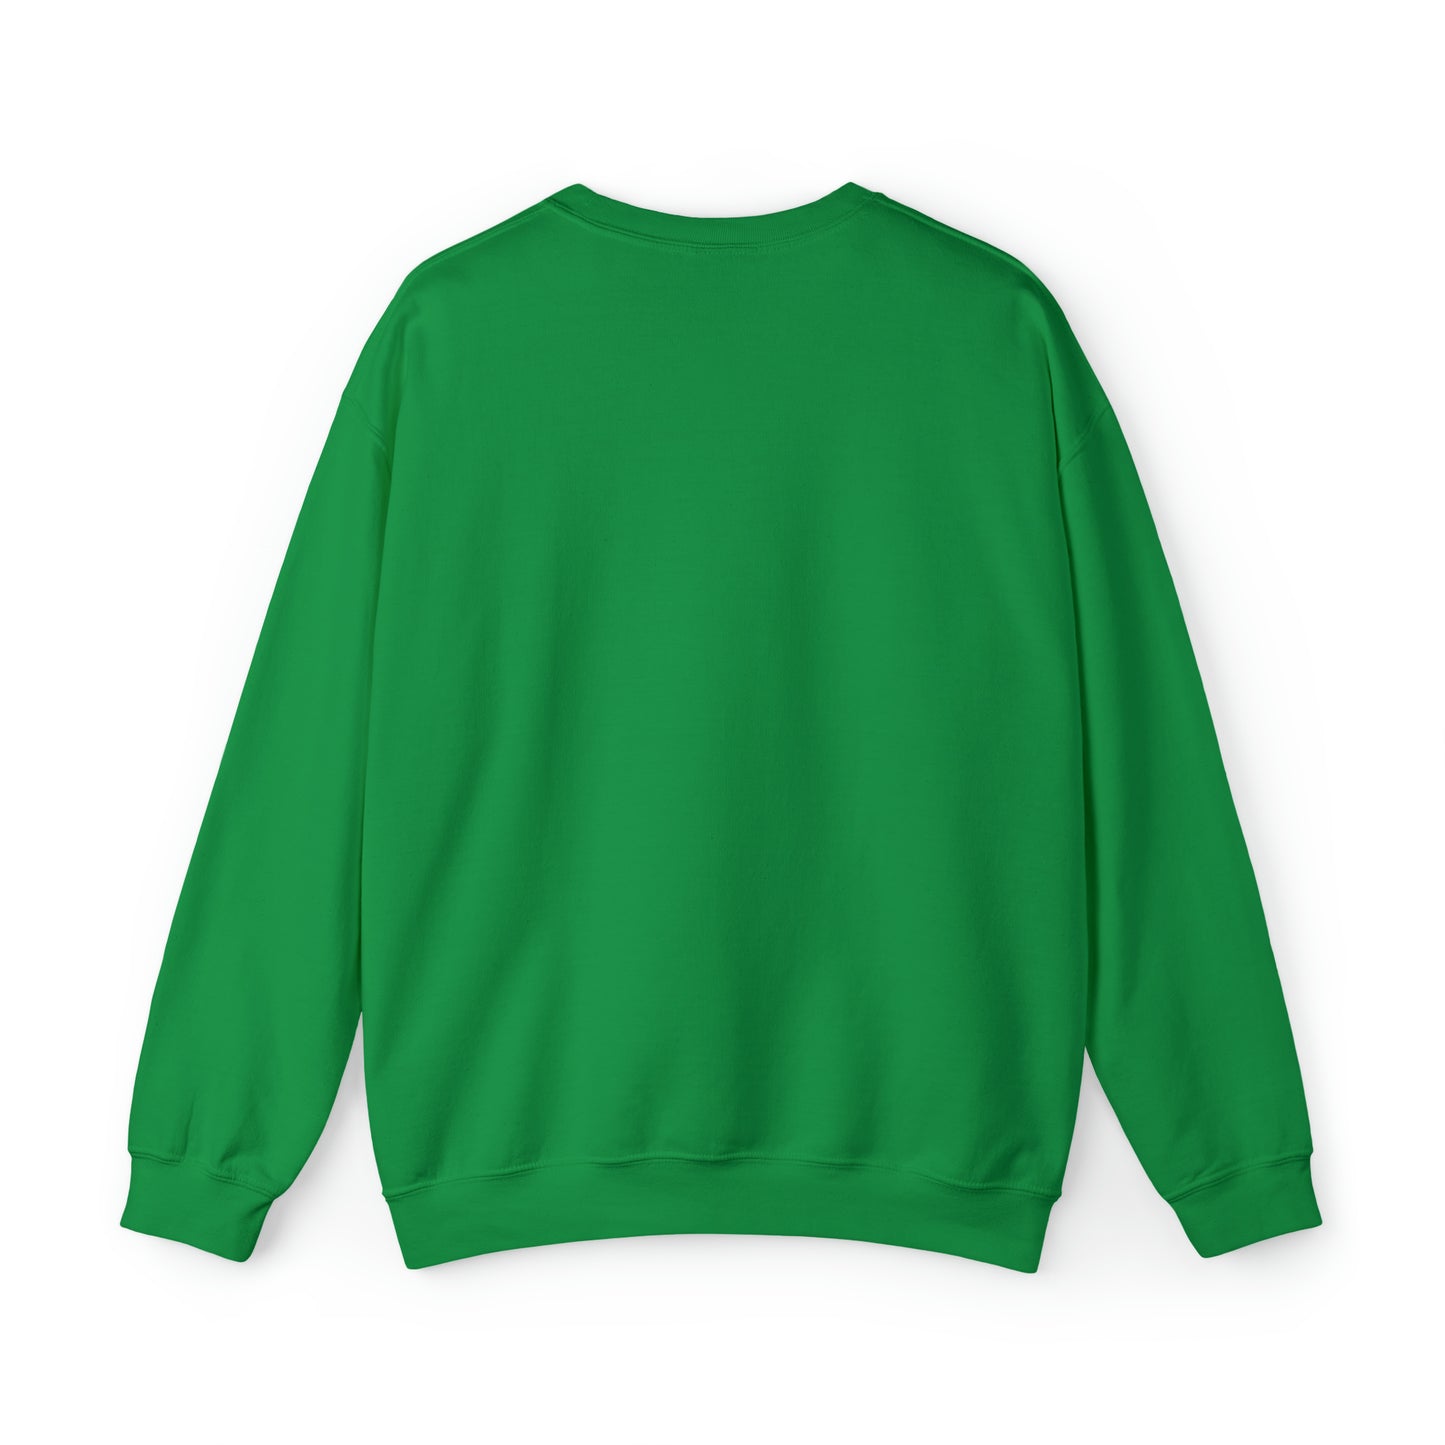 Guest || Unisex Heavy Blend™ Crewneck Sweatshirt